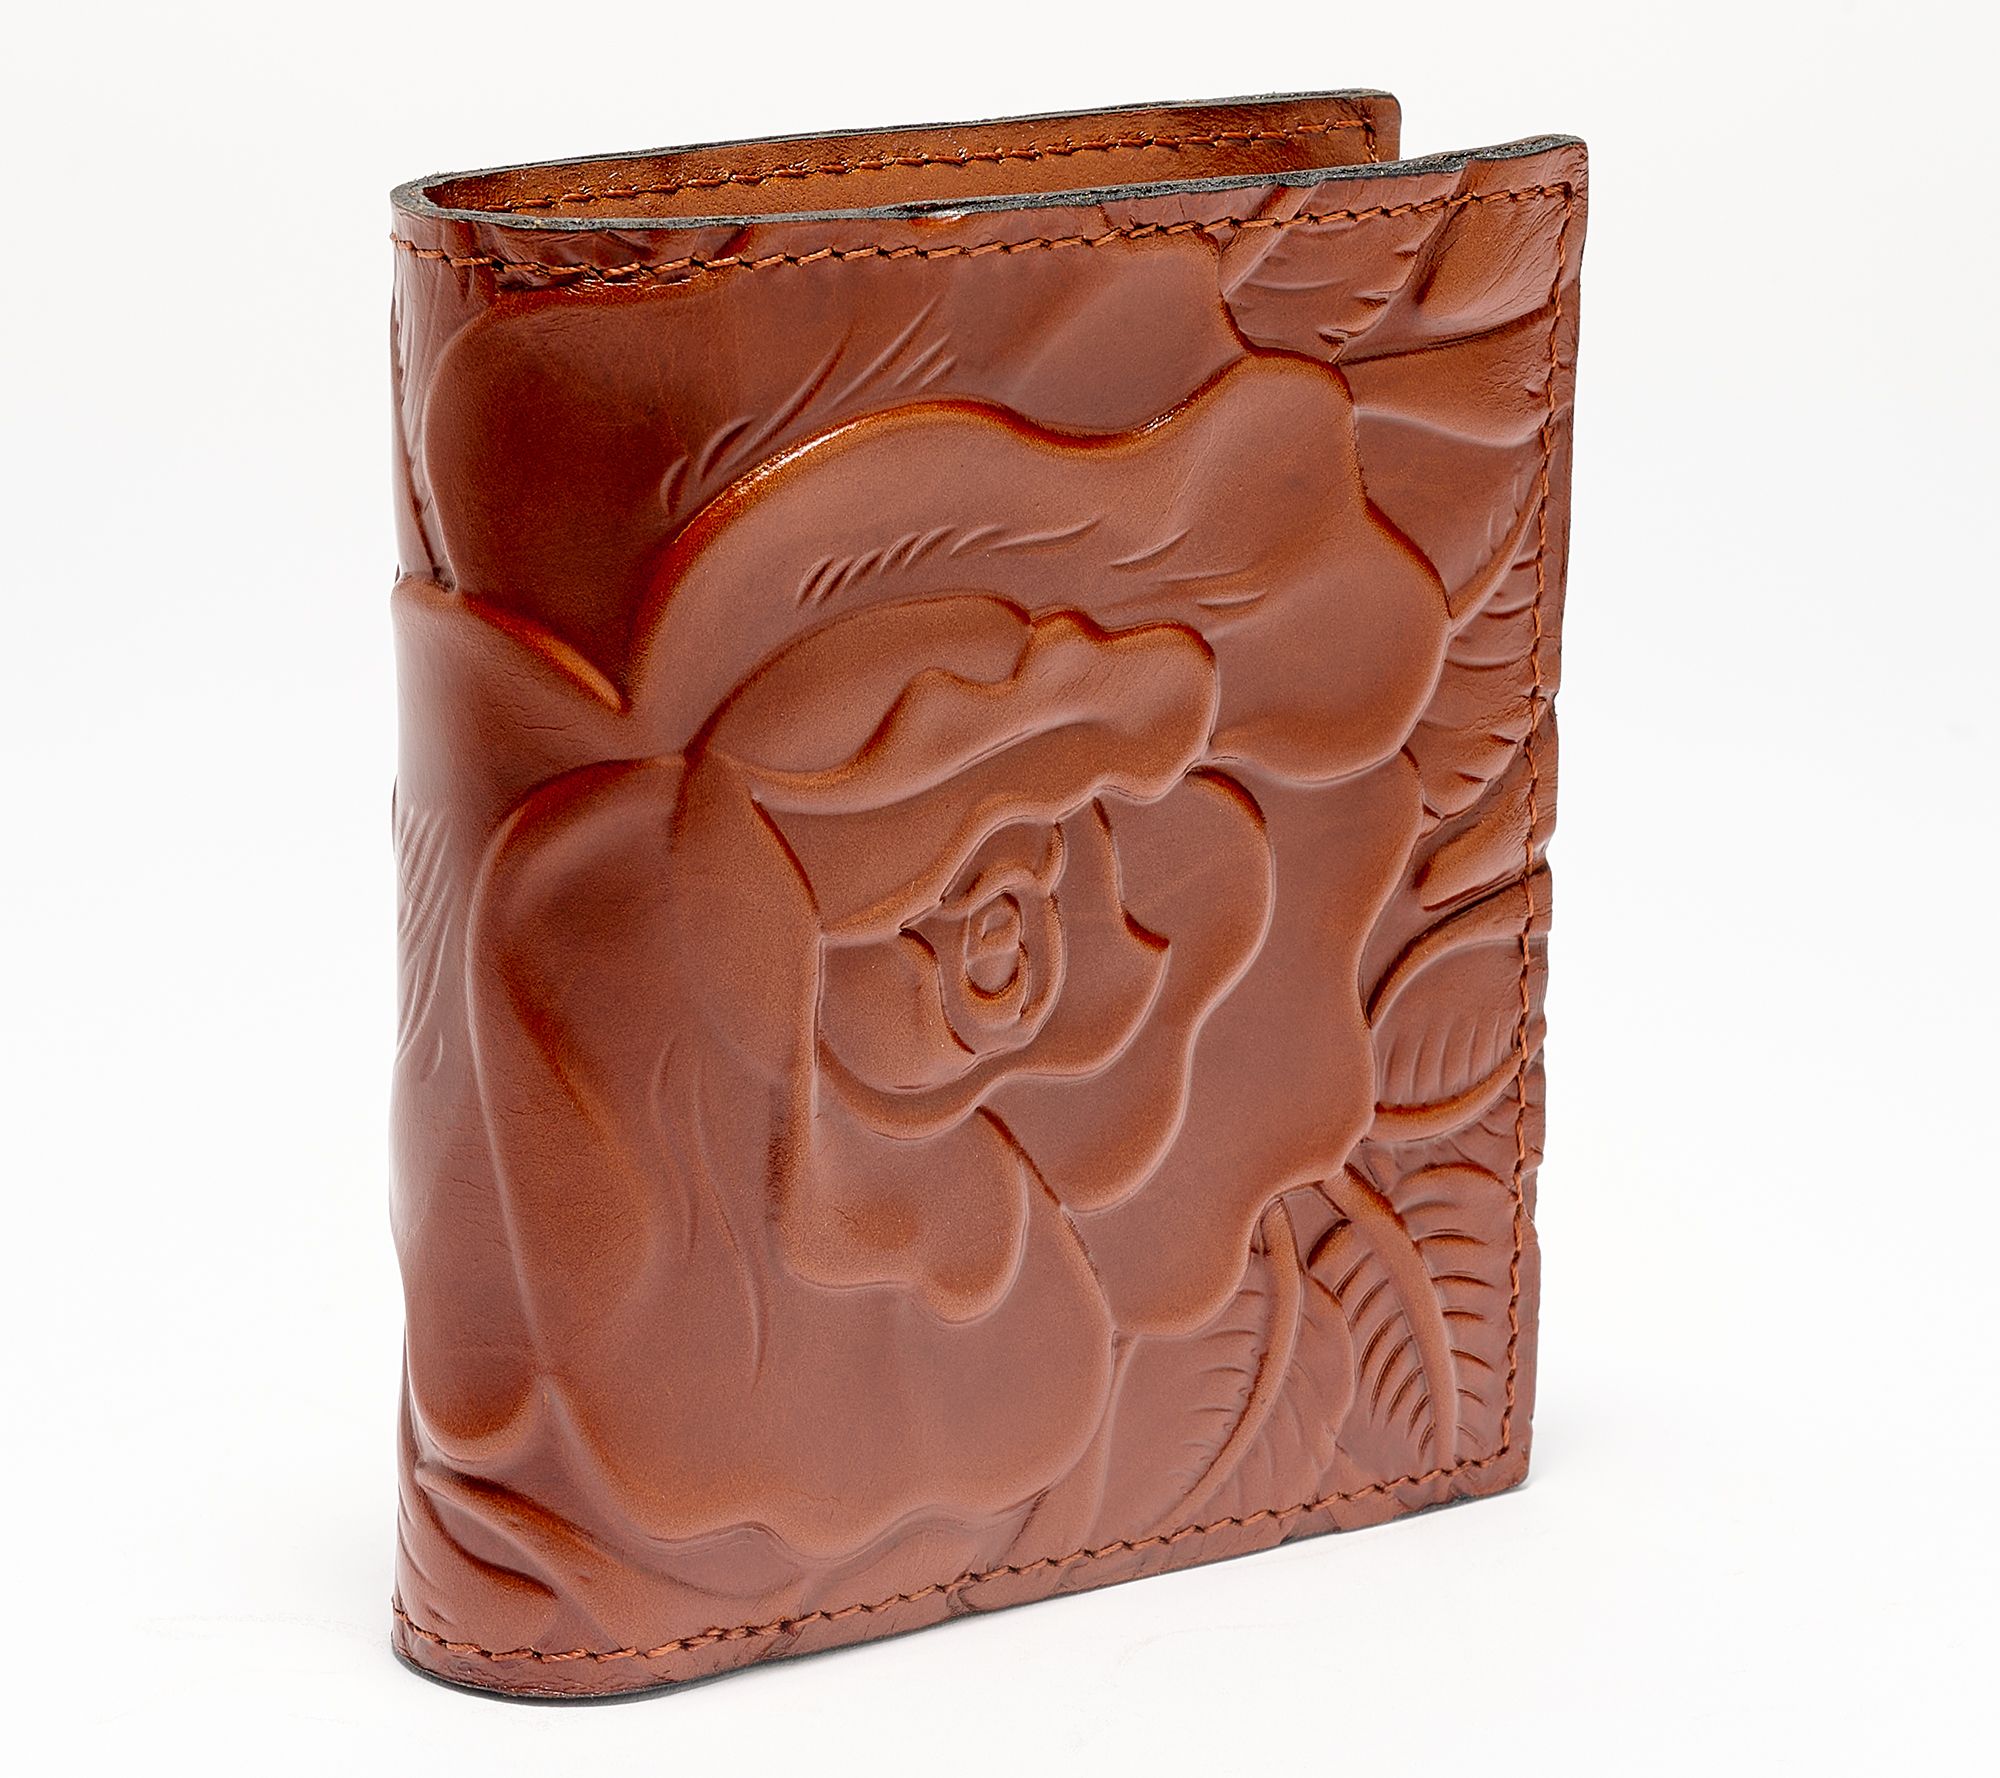 Patricia Nash Carisa Leather Wallet 